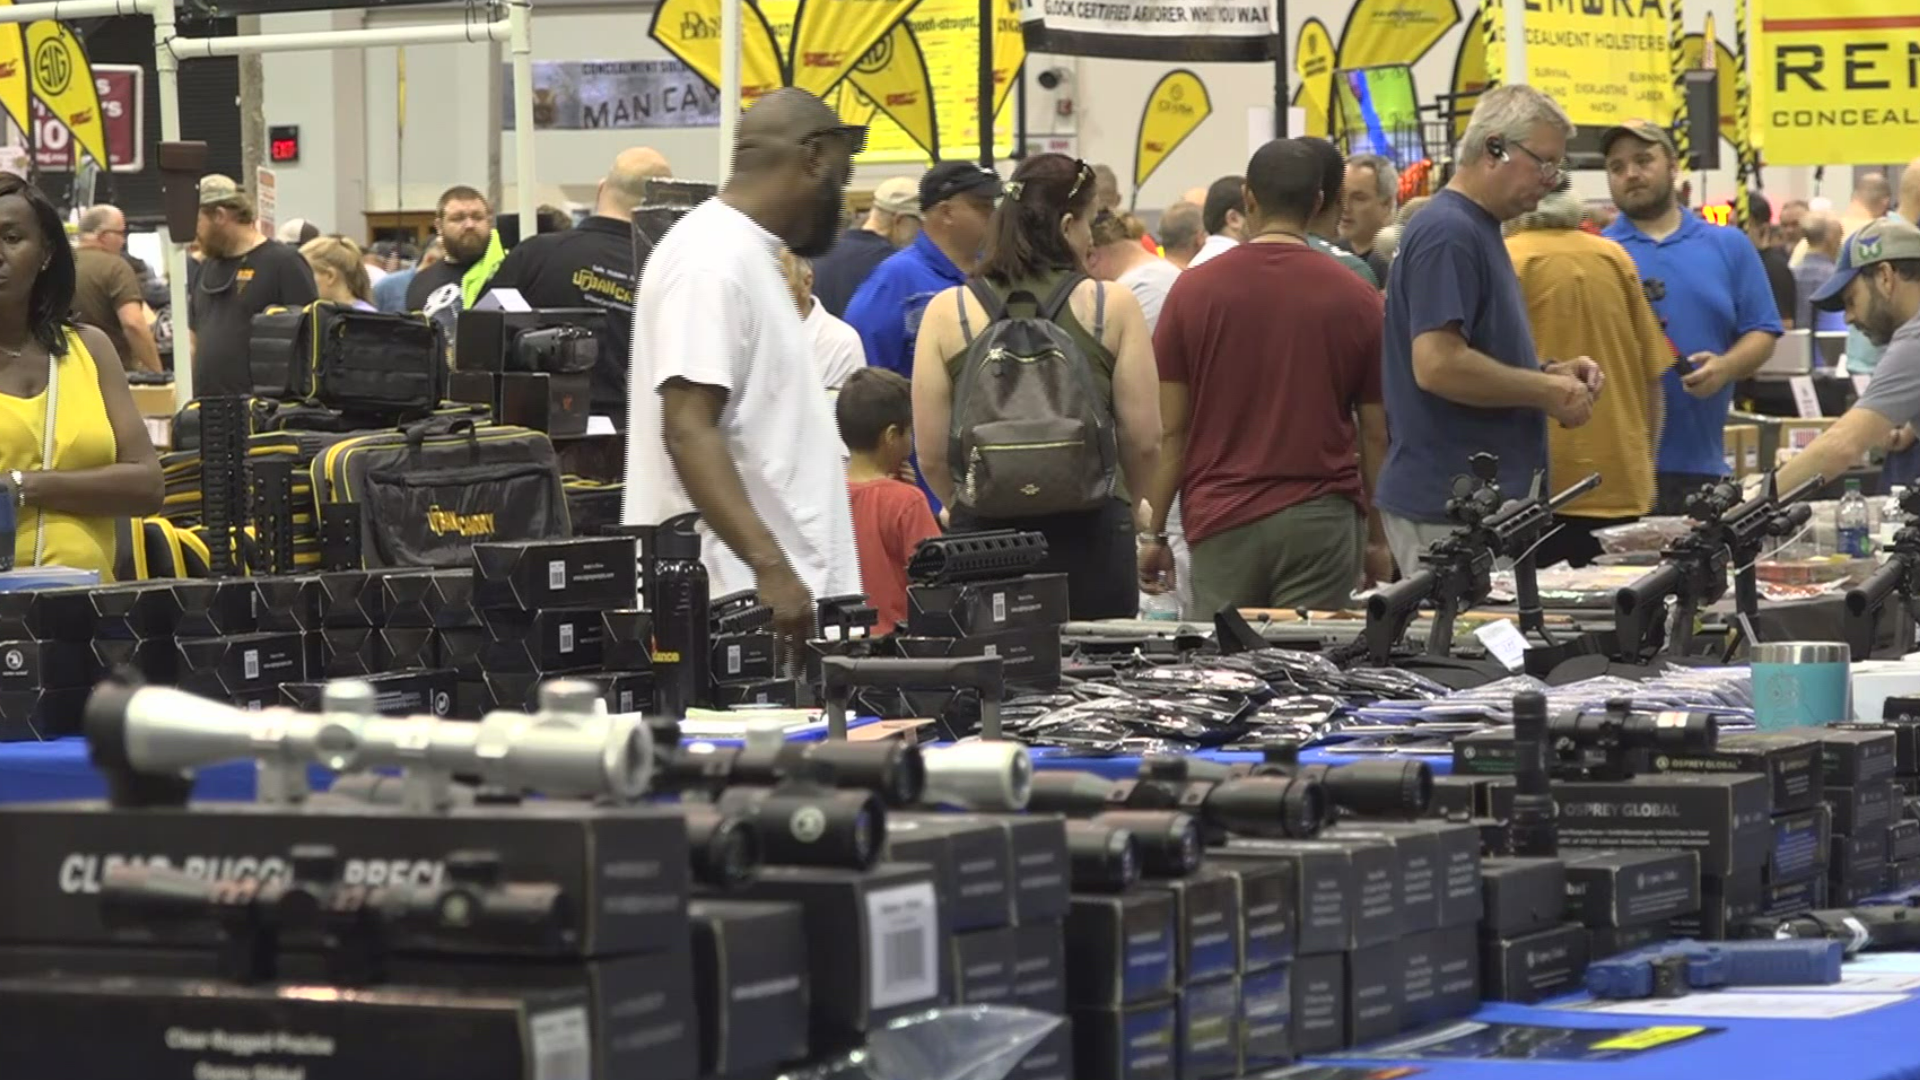 Record number of attendees at Florida gun show despite recent gun control debate